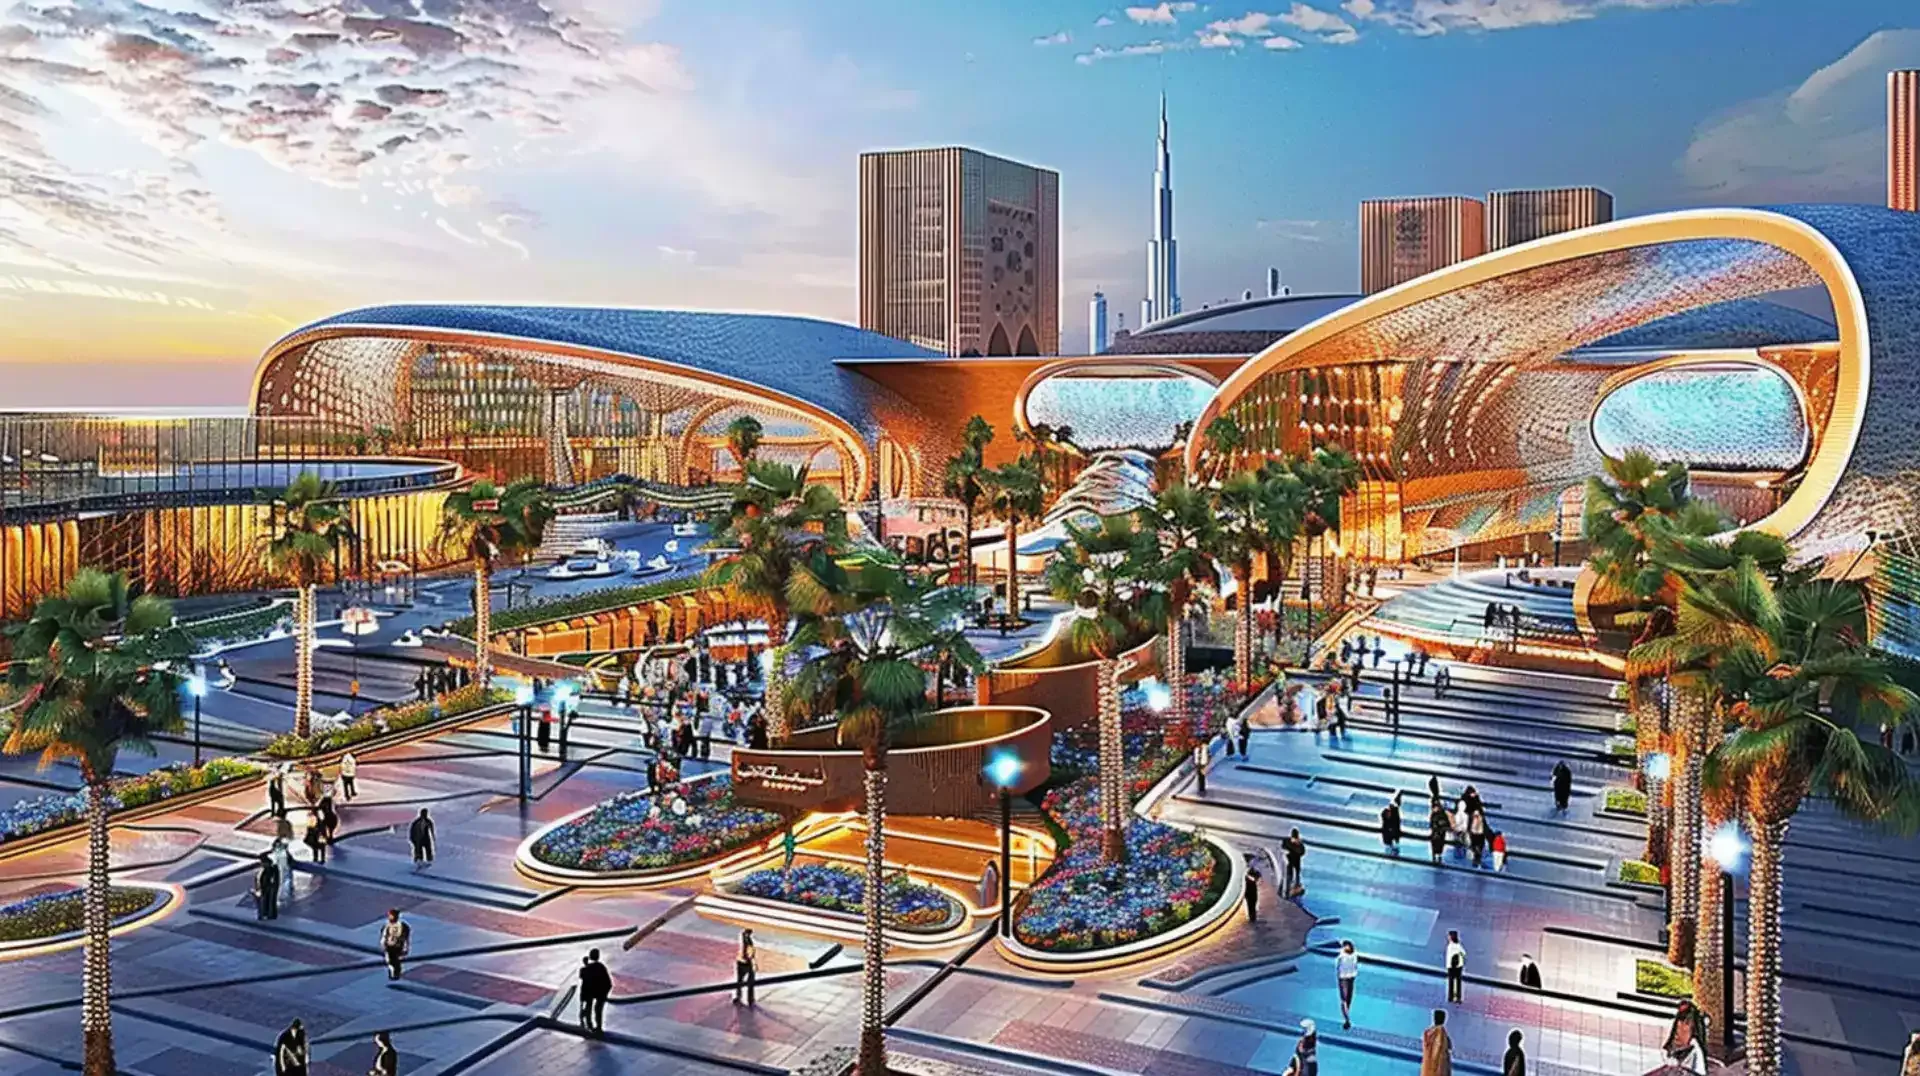 Skyline of Opportunities: Building Business in Dubai 